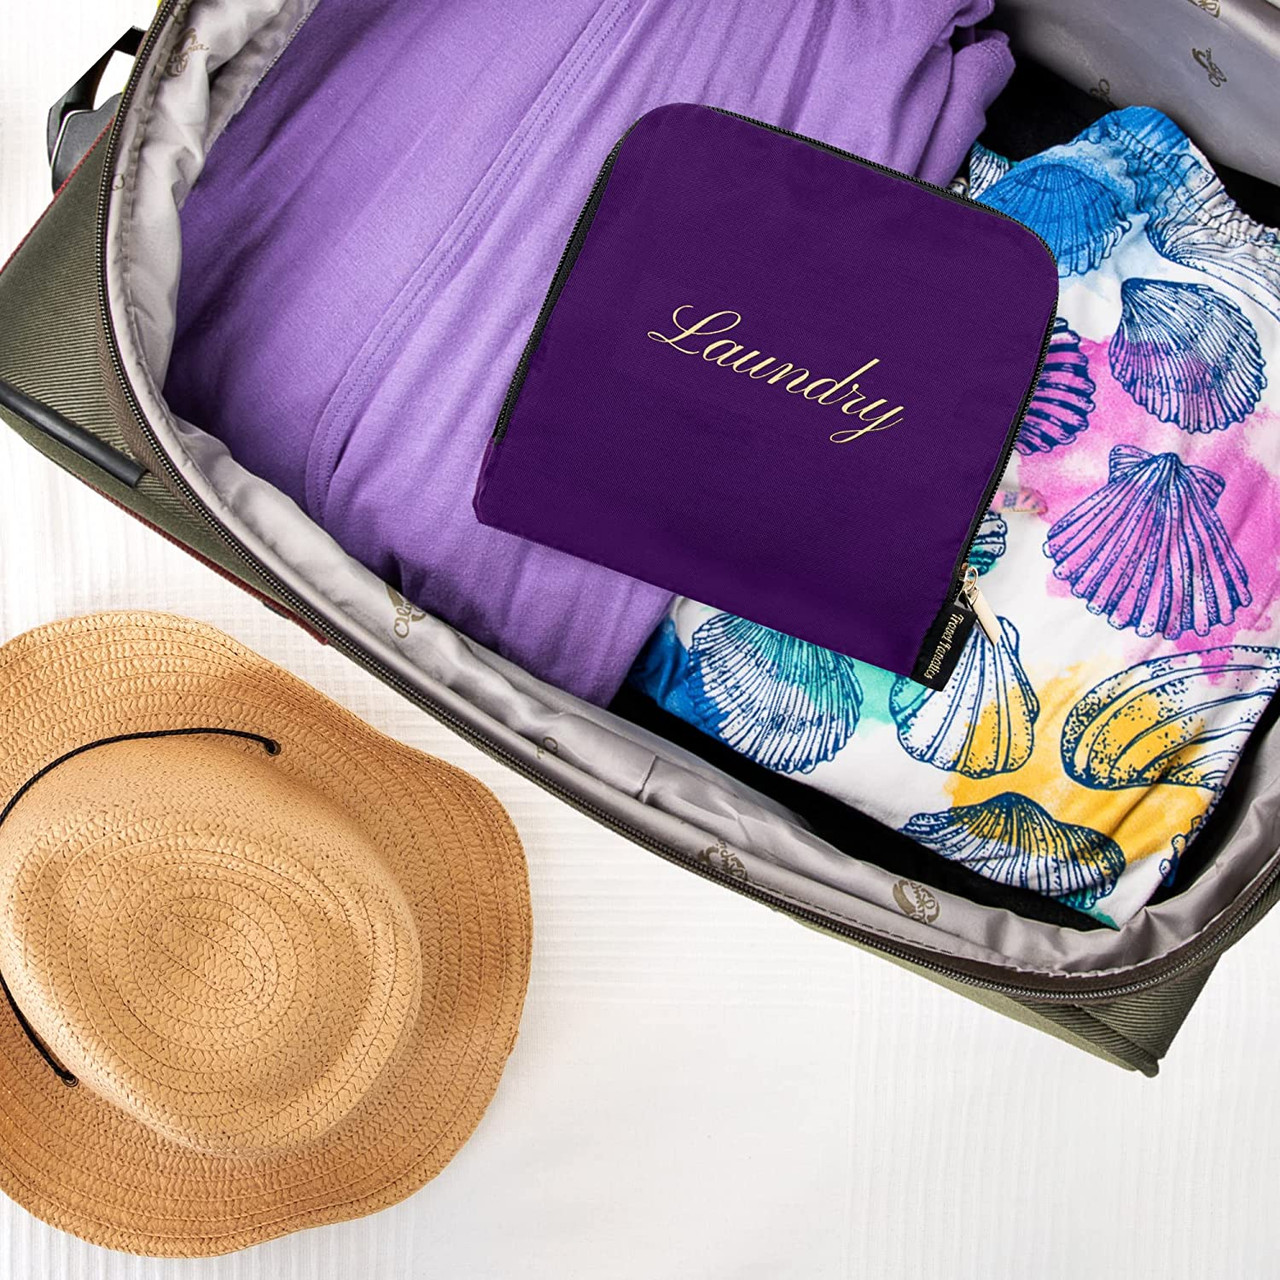 Miamica Grey & Gold Laundry Travel Expandable Laundry Bag